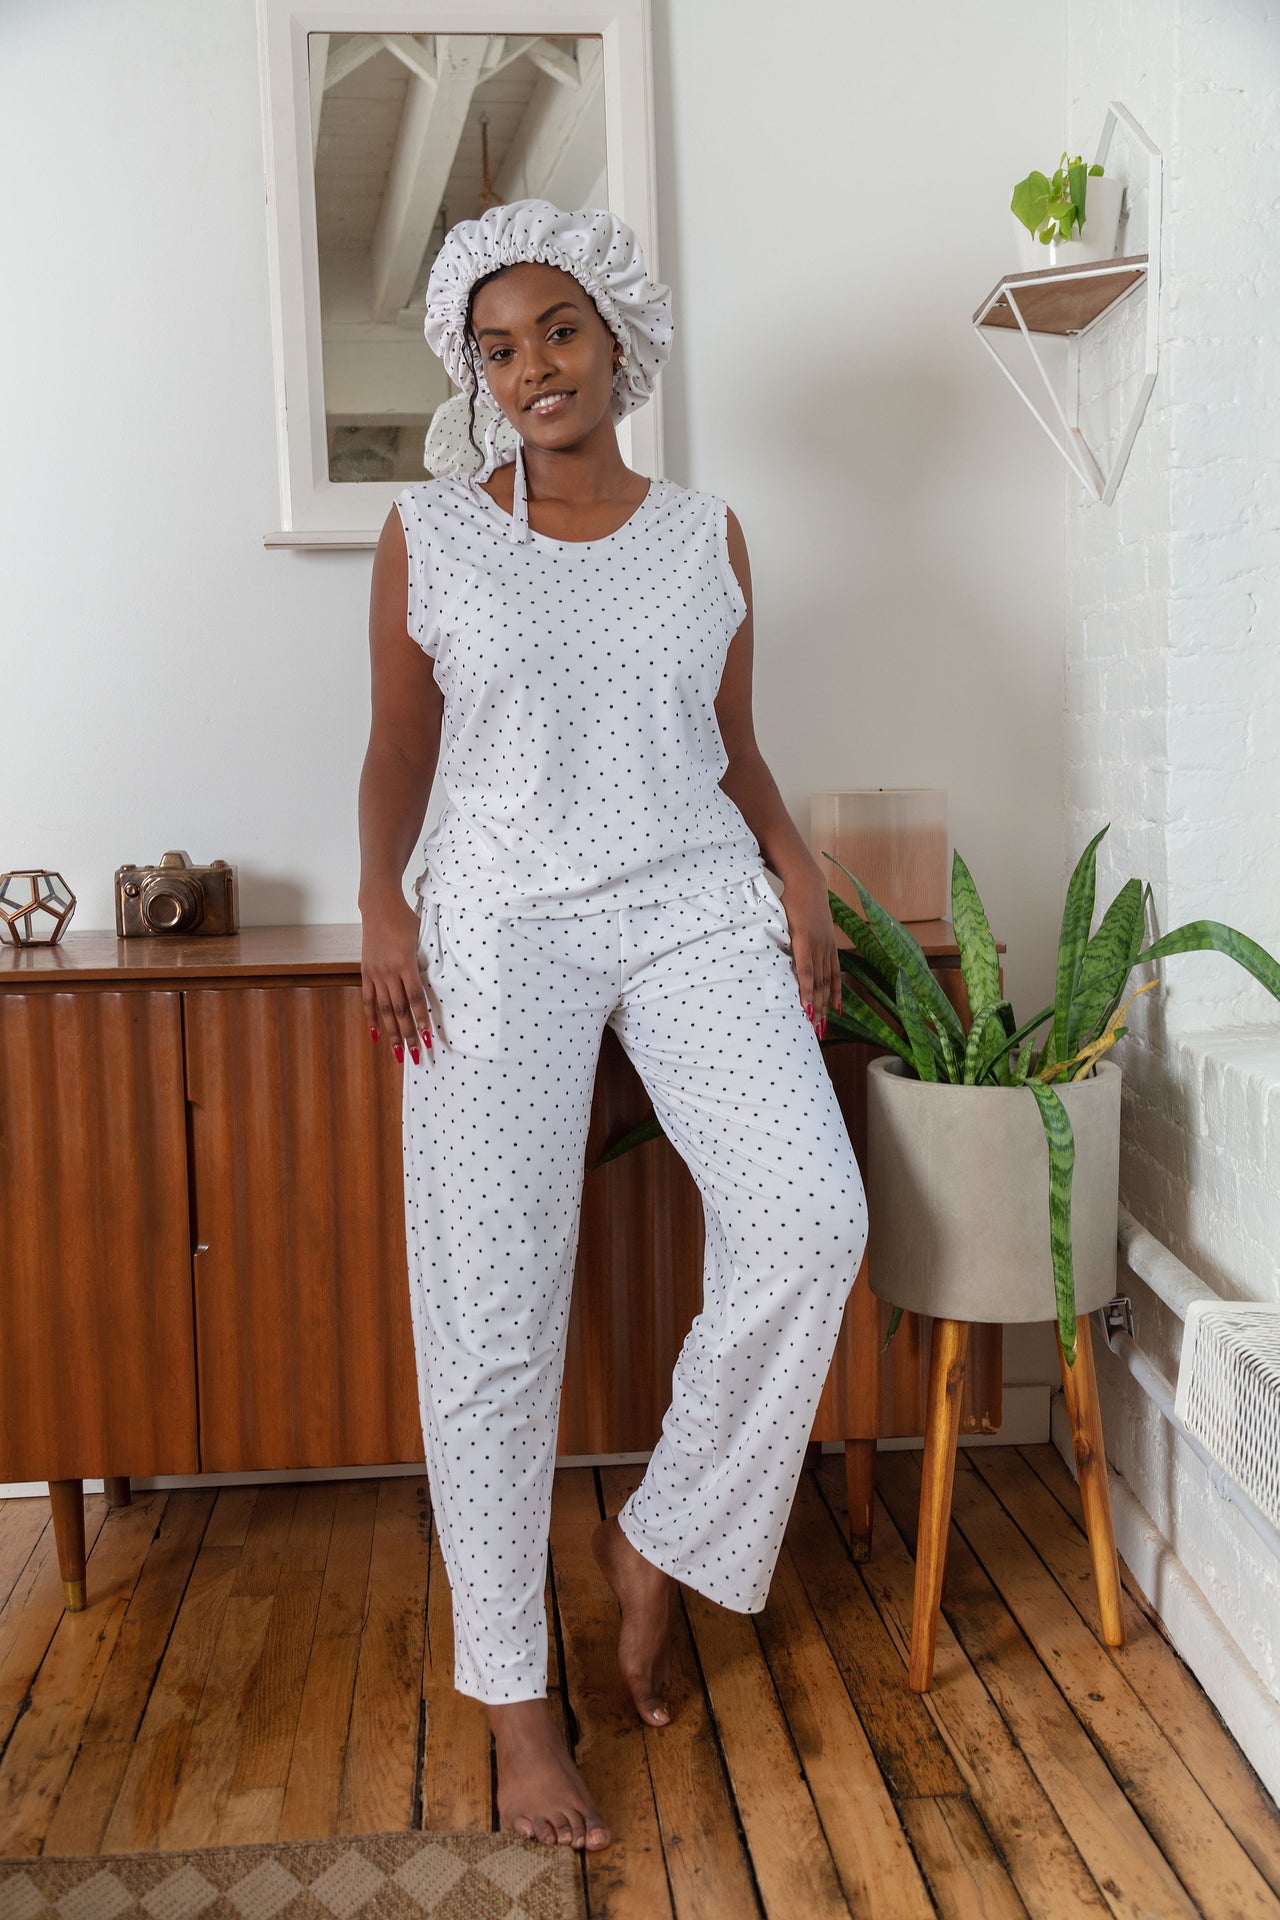 Women's Bamboo Moisture Wicking, Black & White Polka Dot Tank Top, Pajama  Pants Set, With A Matching Satin-Lined Bonnet